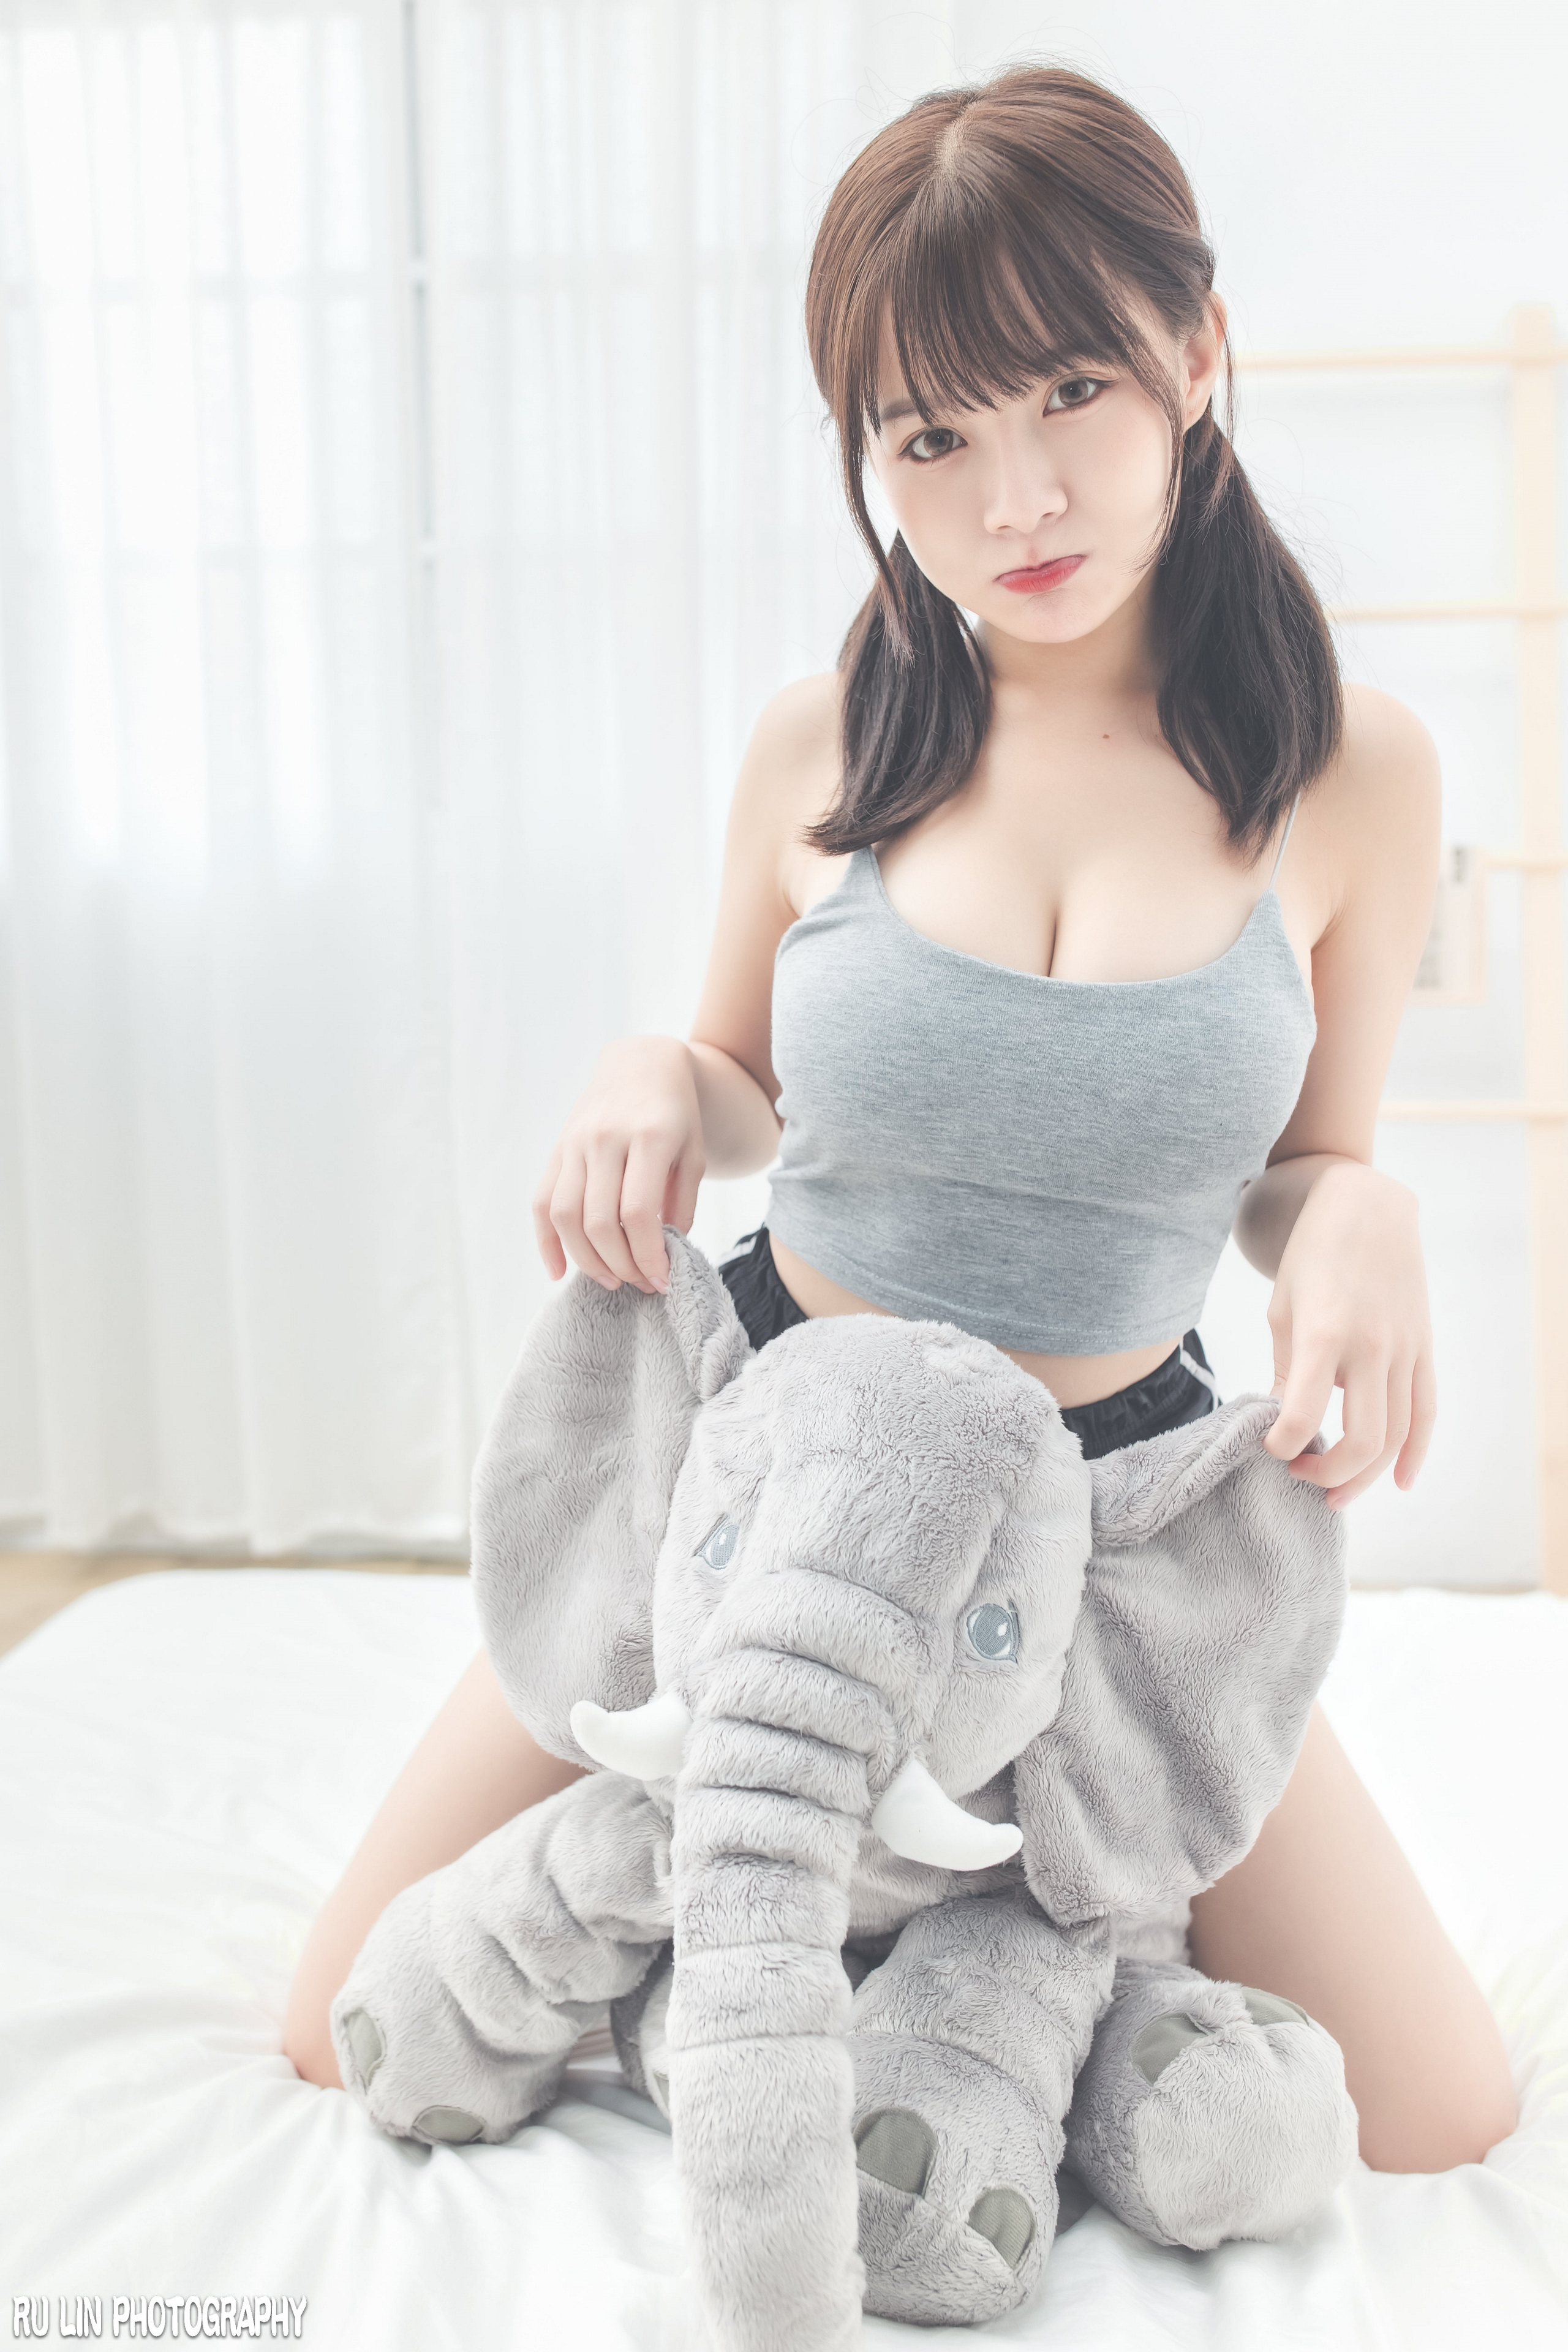 Winnie Qian Women Model Brunette Twintails Grey Tops Teddy Bears Ru Lin Indoors Women Indoors 2560x3840